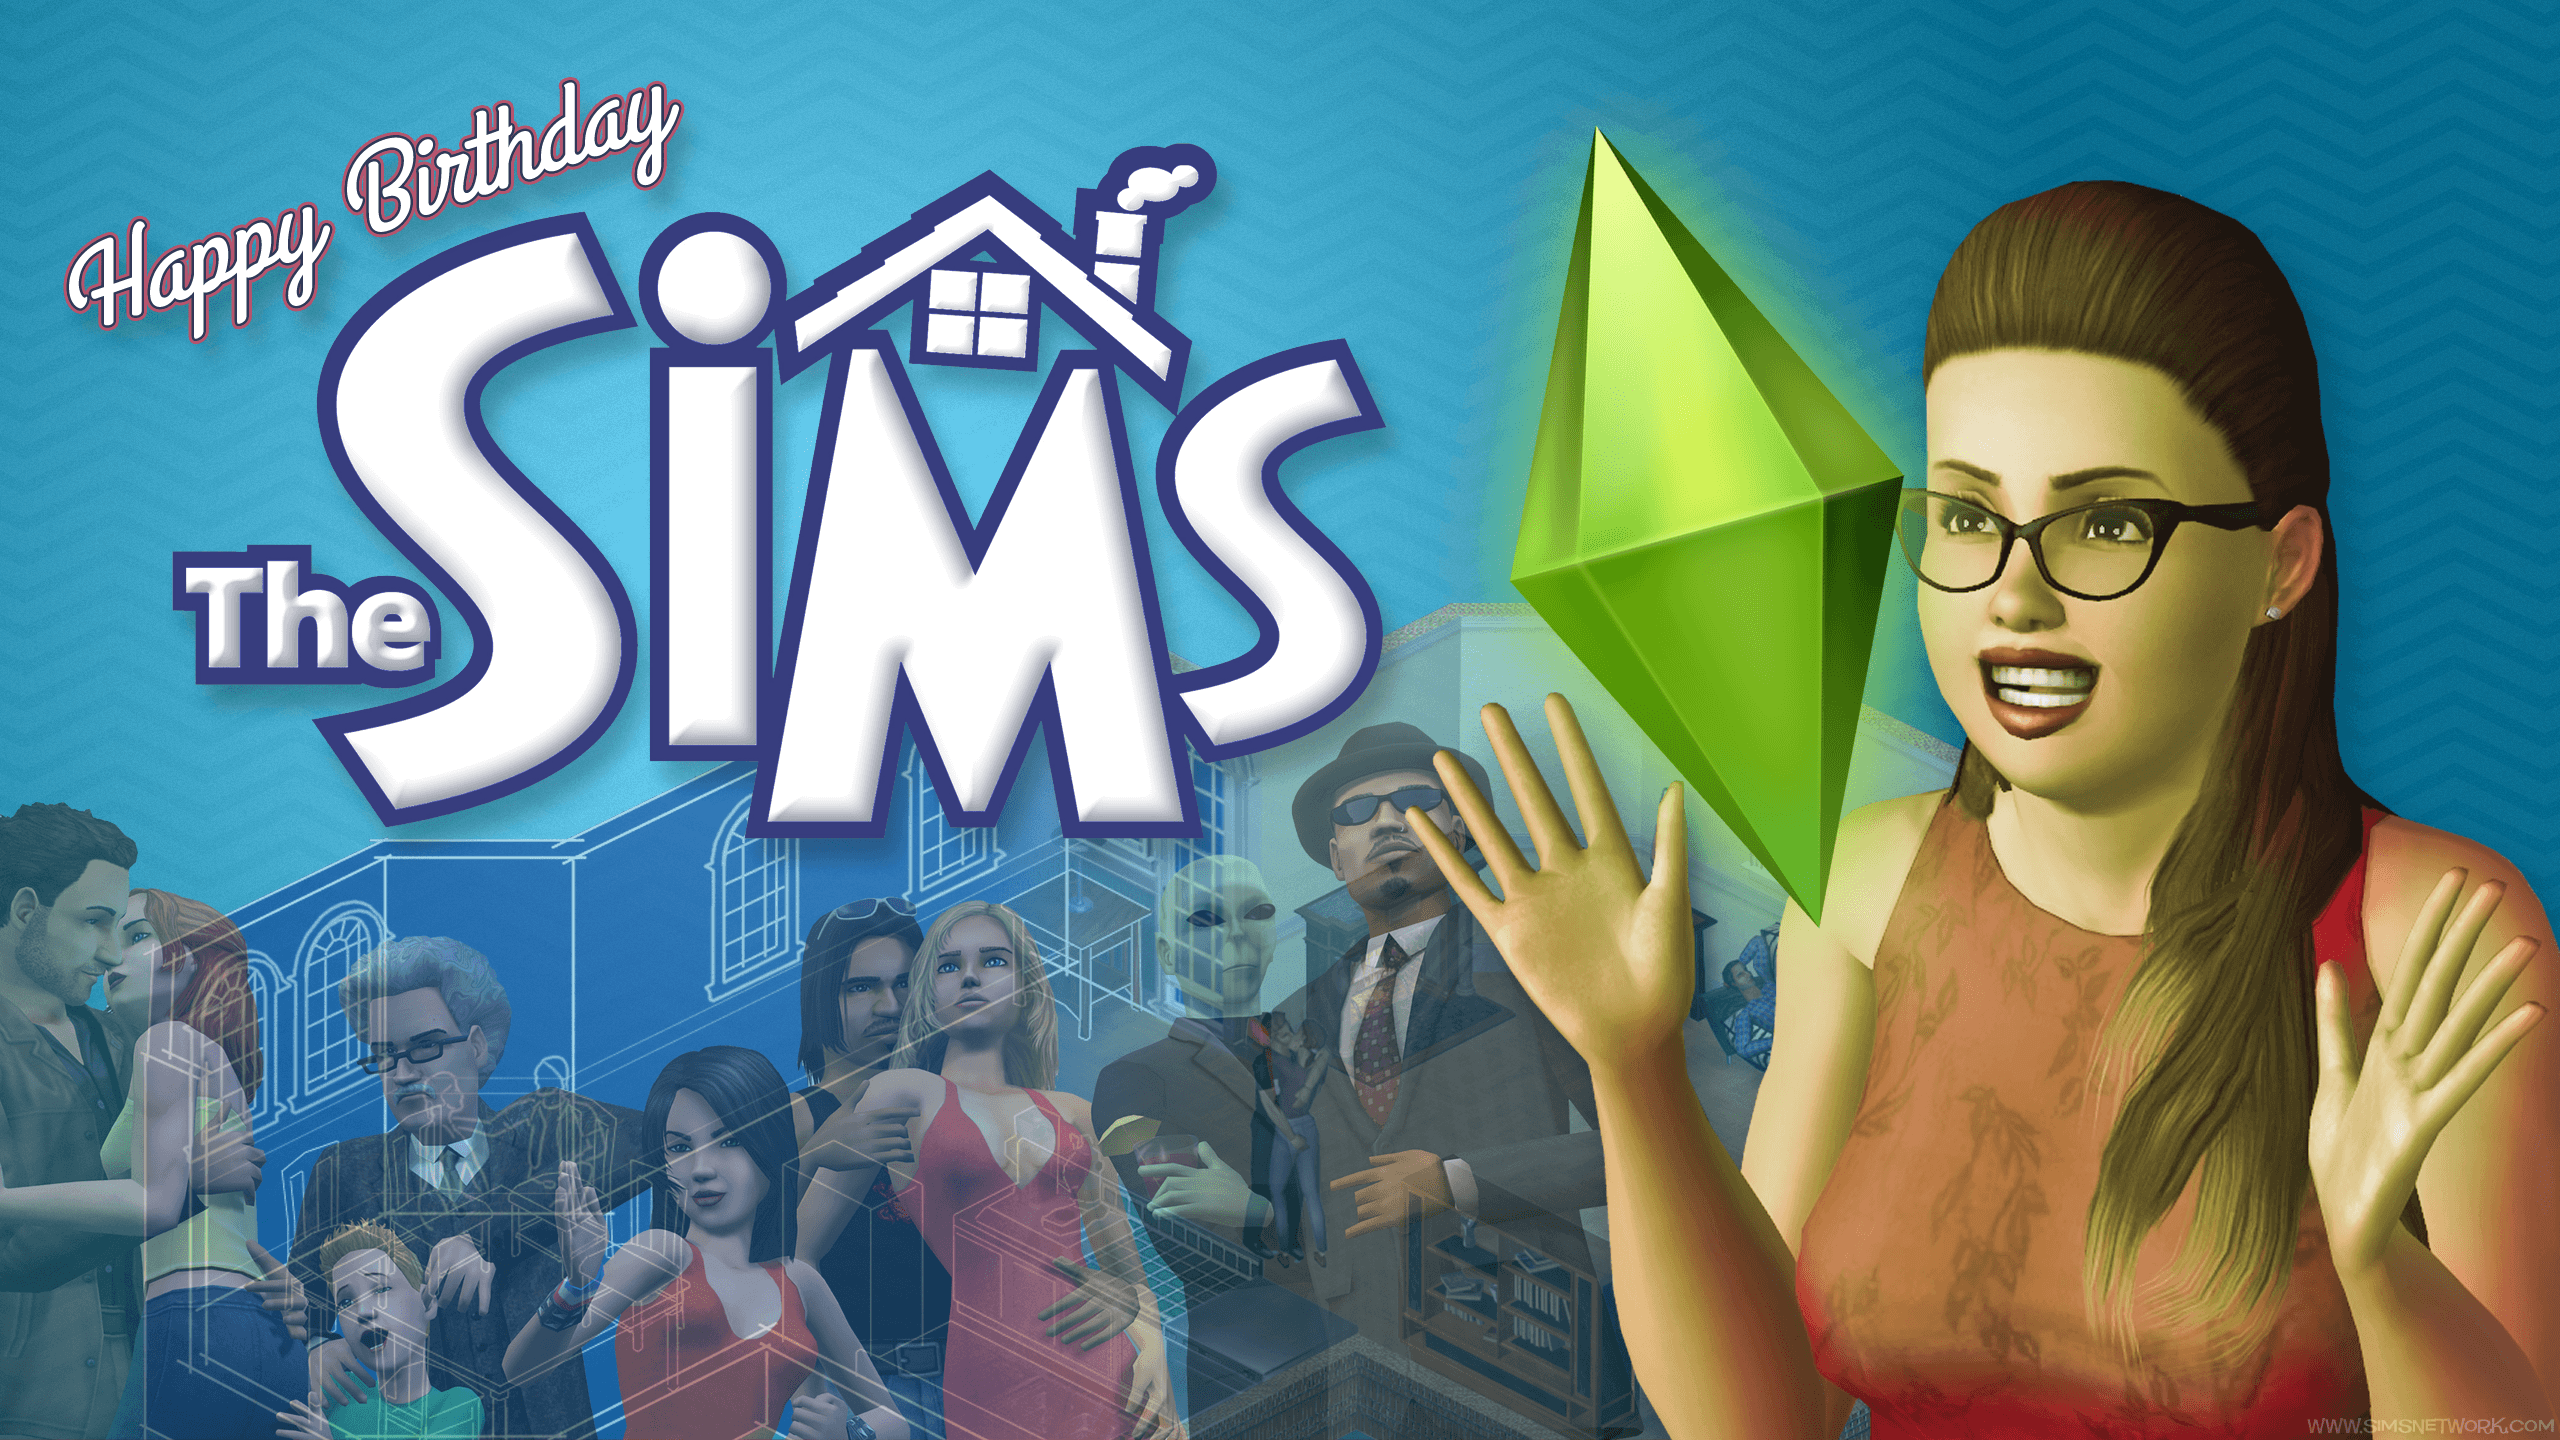 The Sims Anniversary Wallpaper!